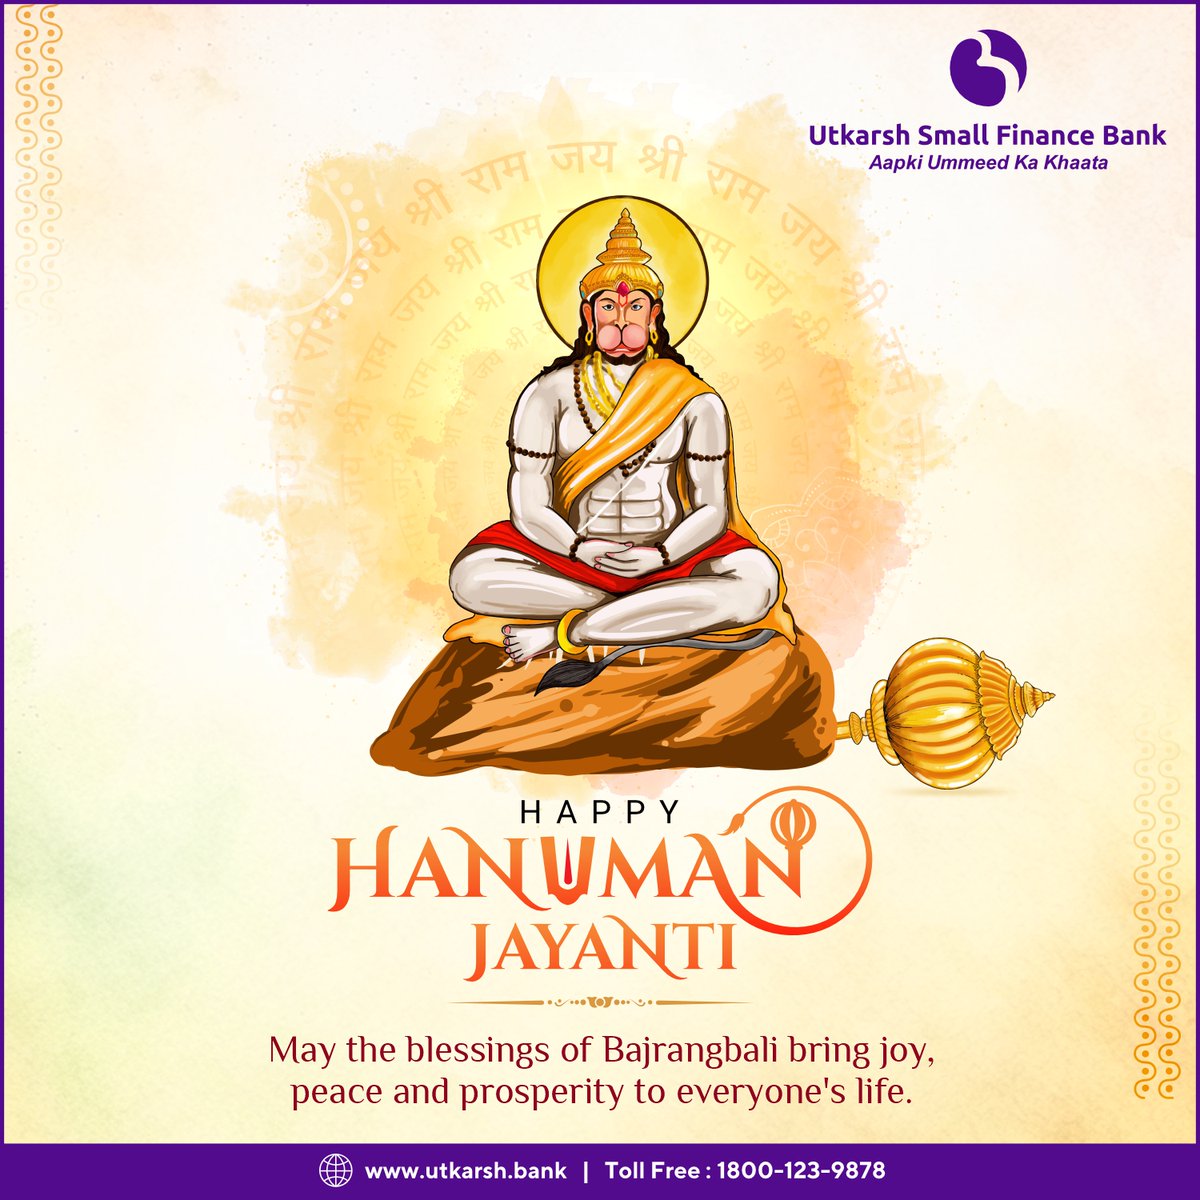 As we celebrate Hanuman Jayanti, let's immerse ourselves in the glory of Lord Hanuman and seek his blessings for courage, wisdom and inner strength. Jai Shri Ram! #HanumanJayanti #Utkarshsmallfinancebank #BFSI